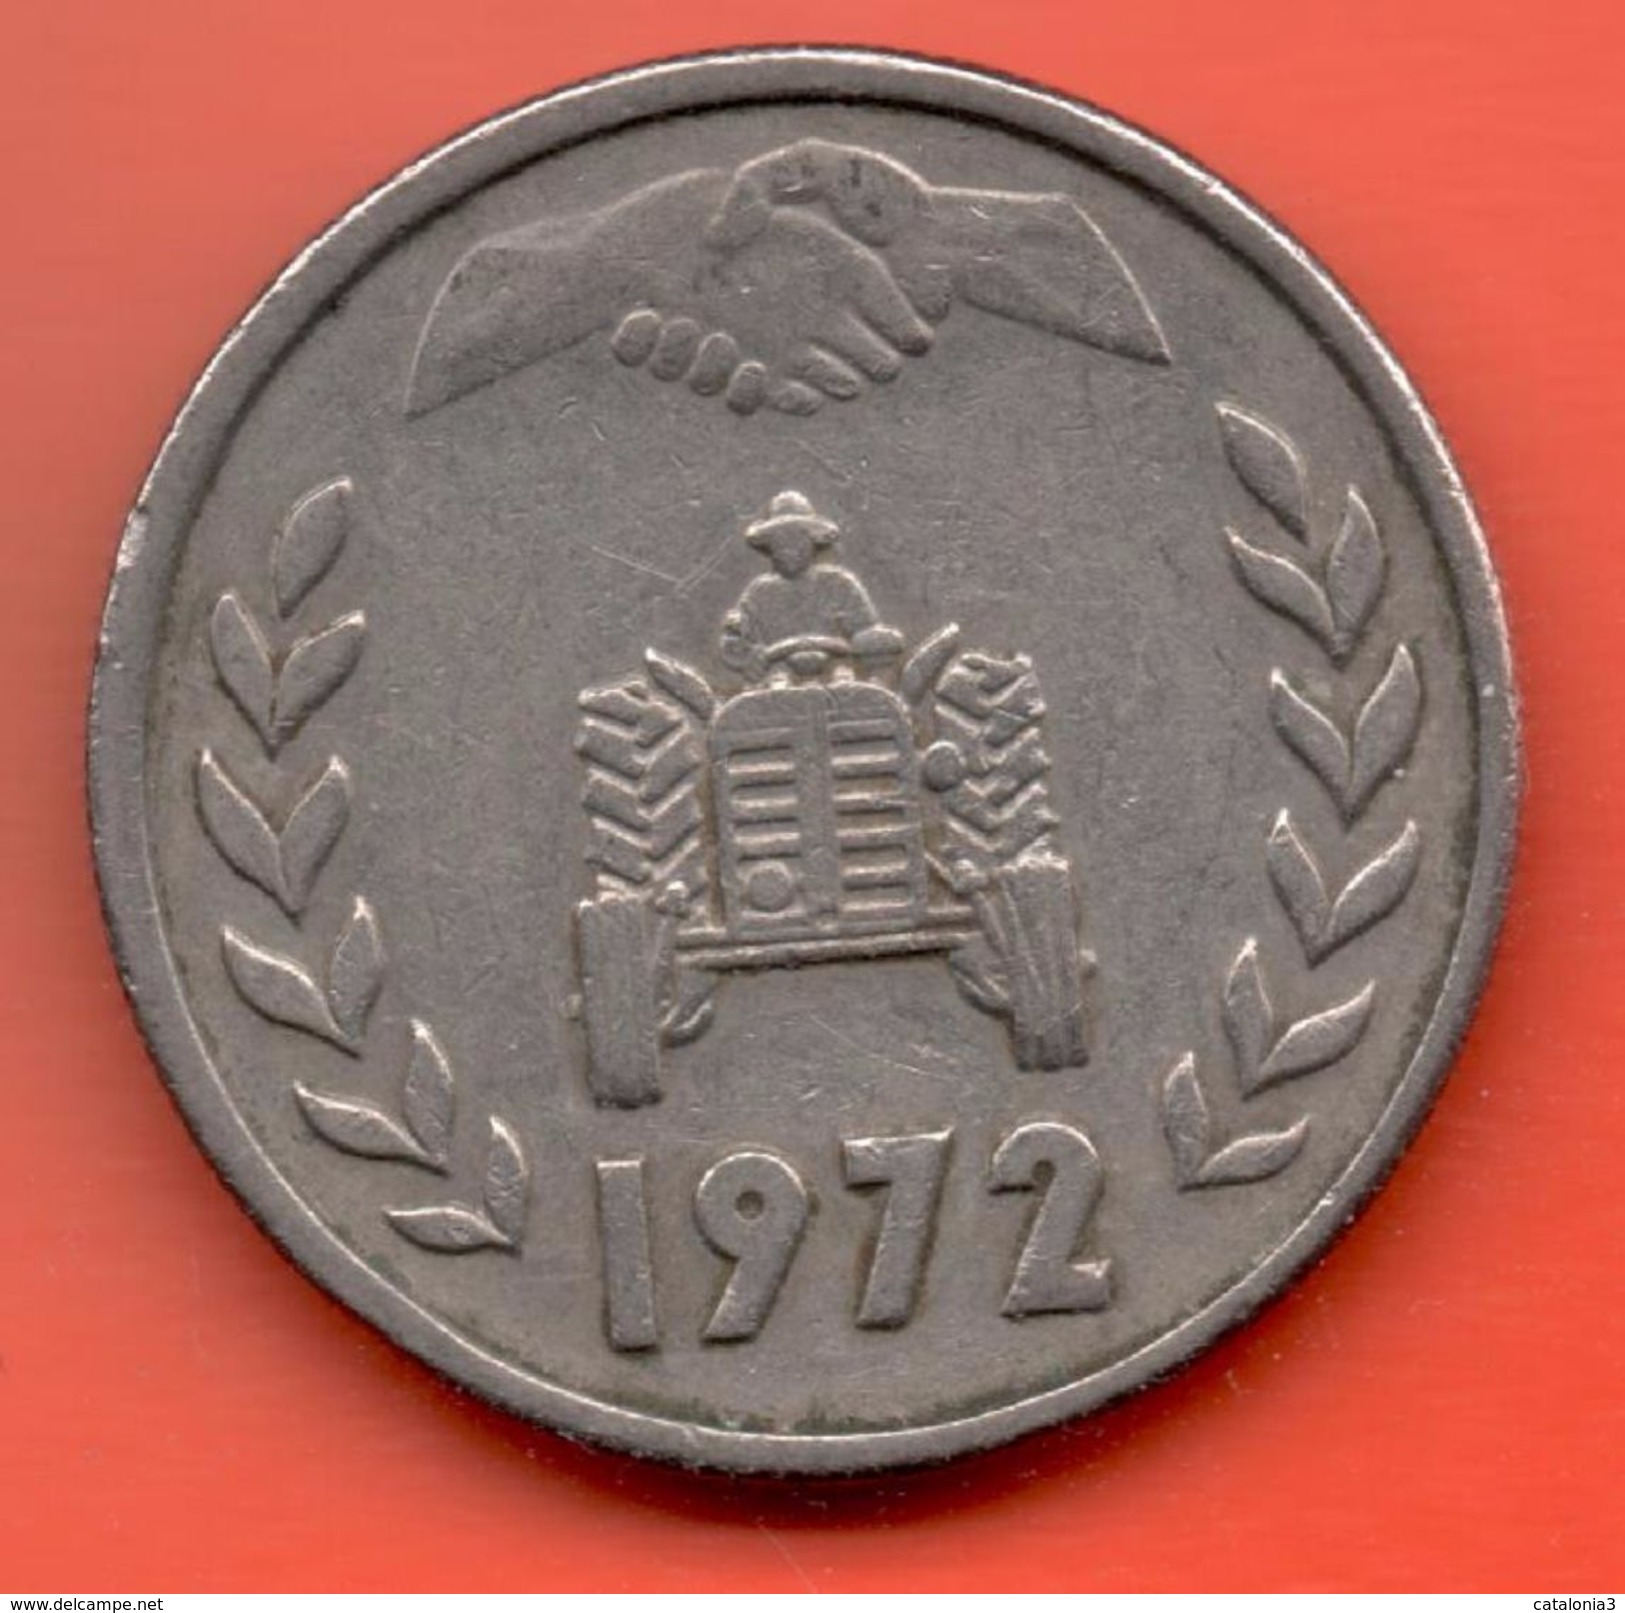 ARGELIA - ALGERIA = 1 DINAR 1972 - Algeria